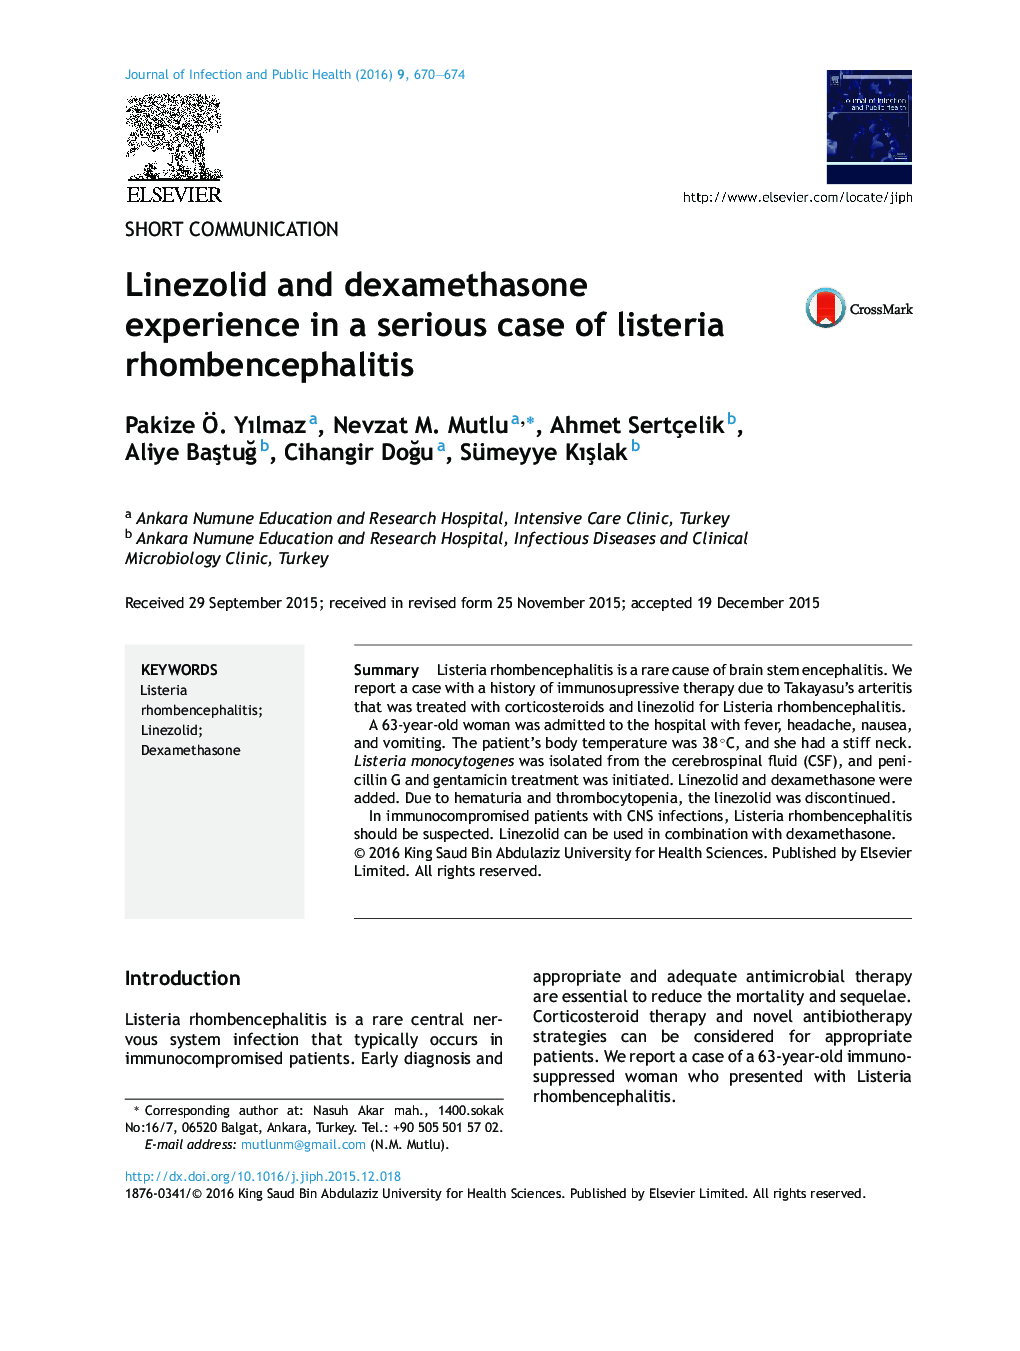 Linezolid and dexamethasone experience in a serious case of listeria rhombencephalitis